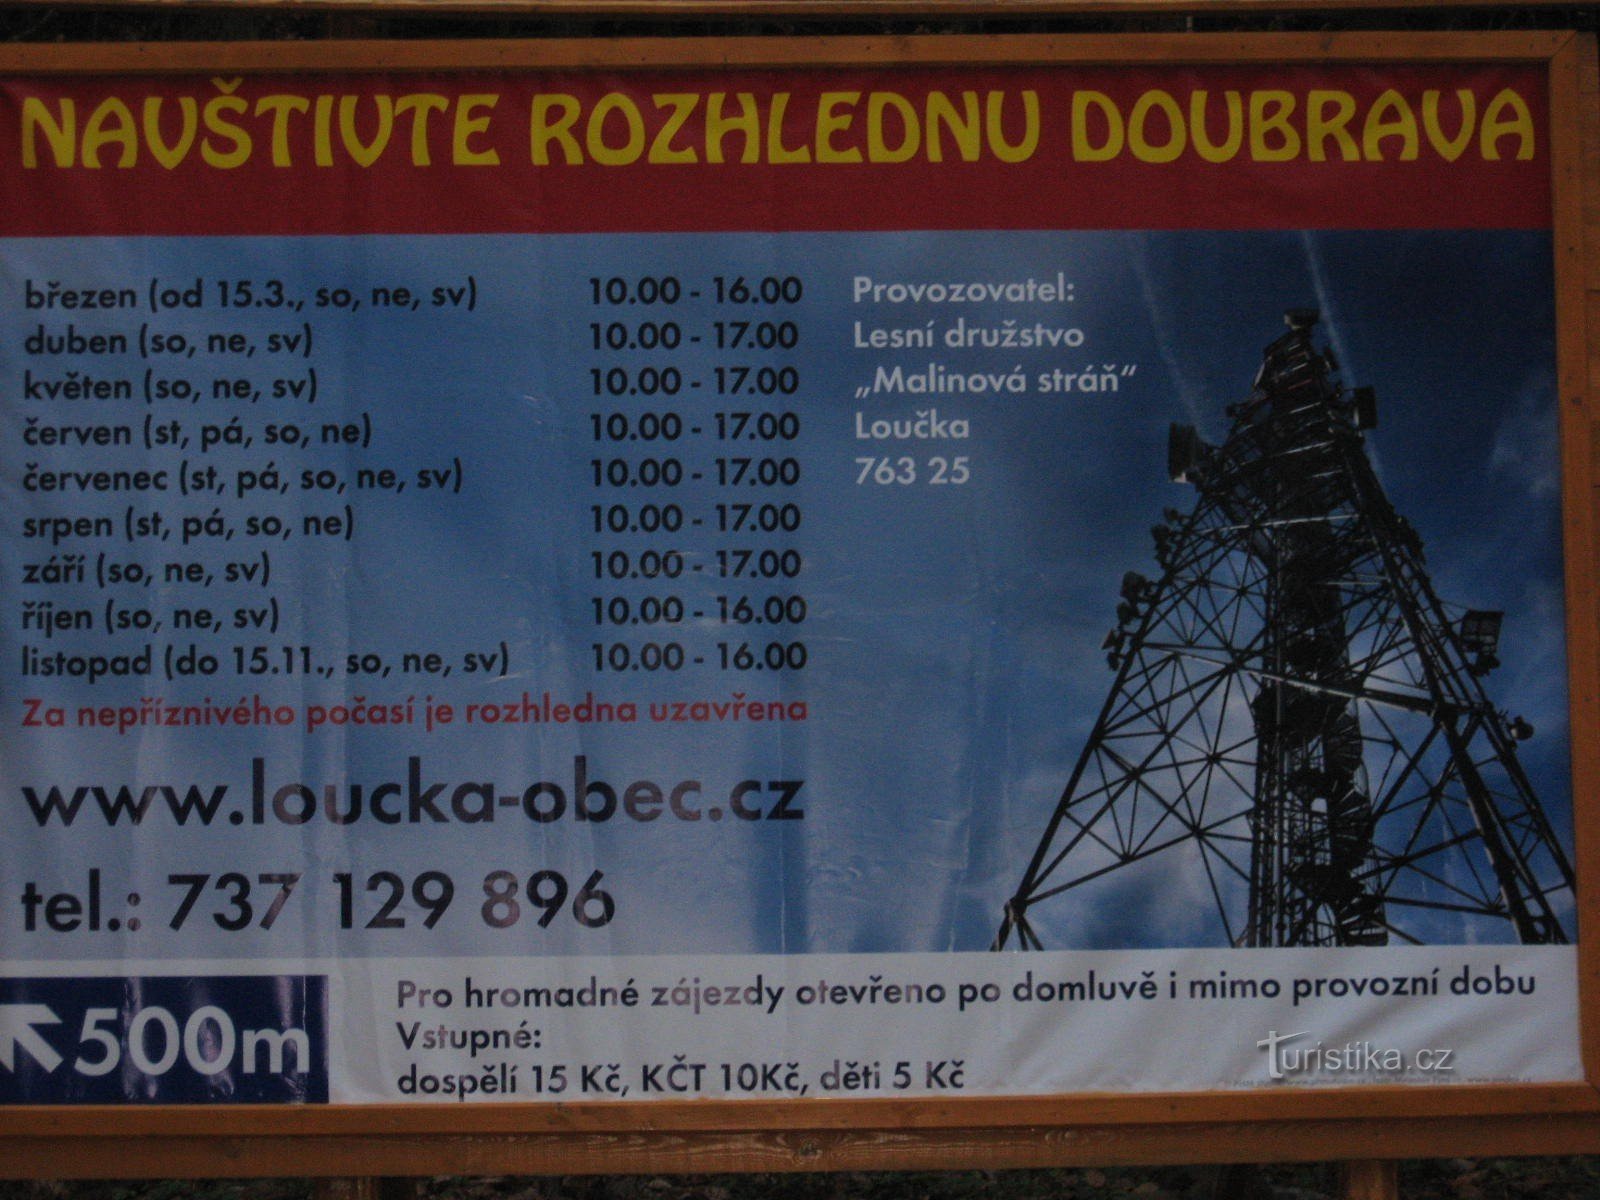 Turnul de belvedere Doubrava